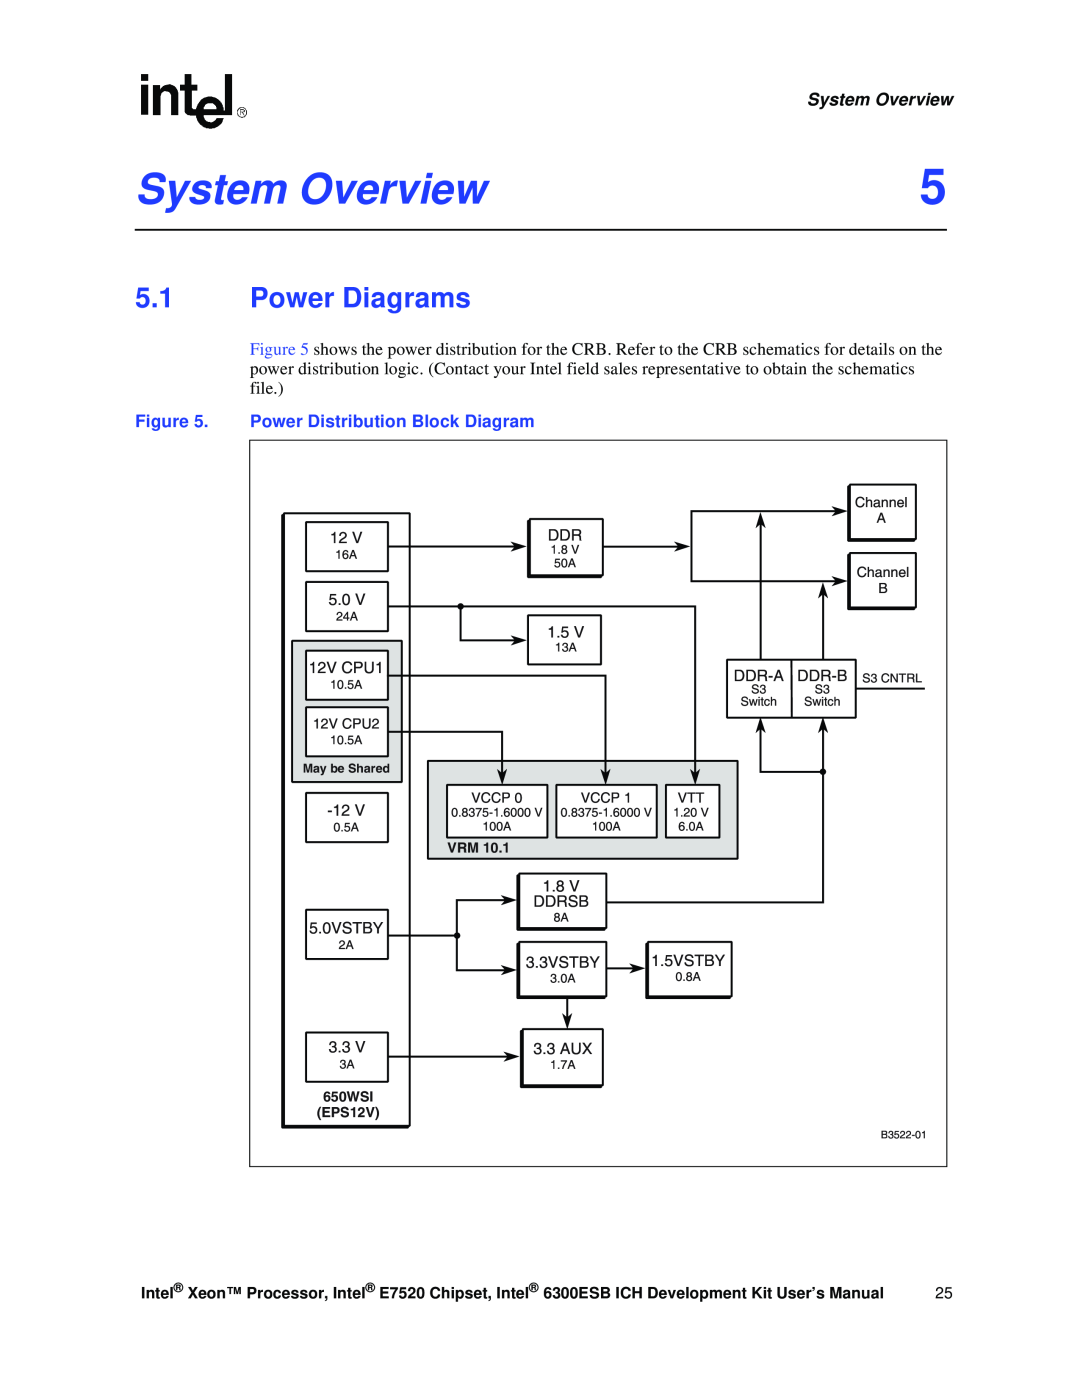 Intel 6300ESB ICH, Xeon user manual System Overview, Power Diagrams, Block Diagram 